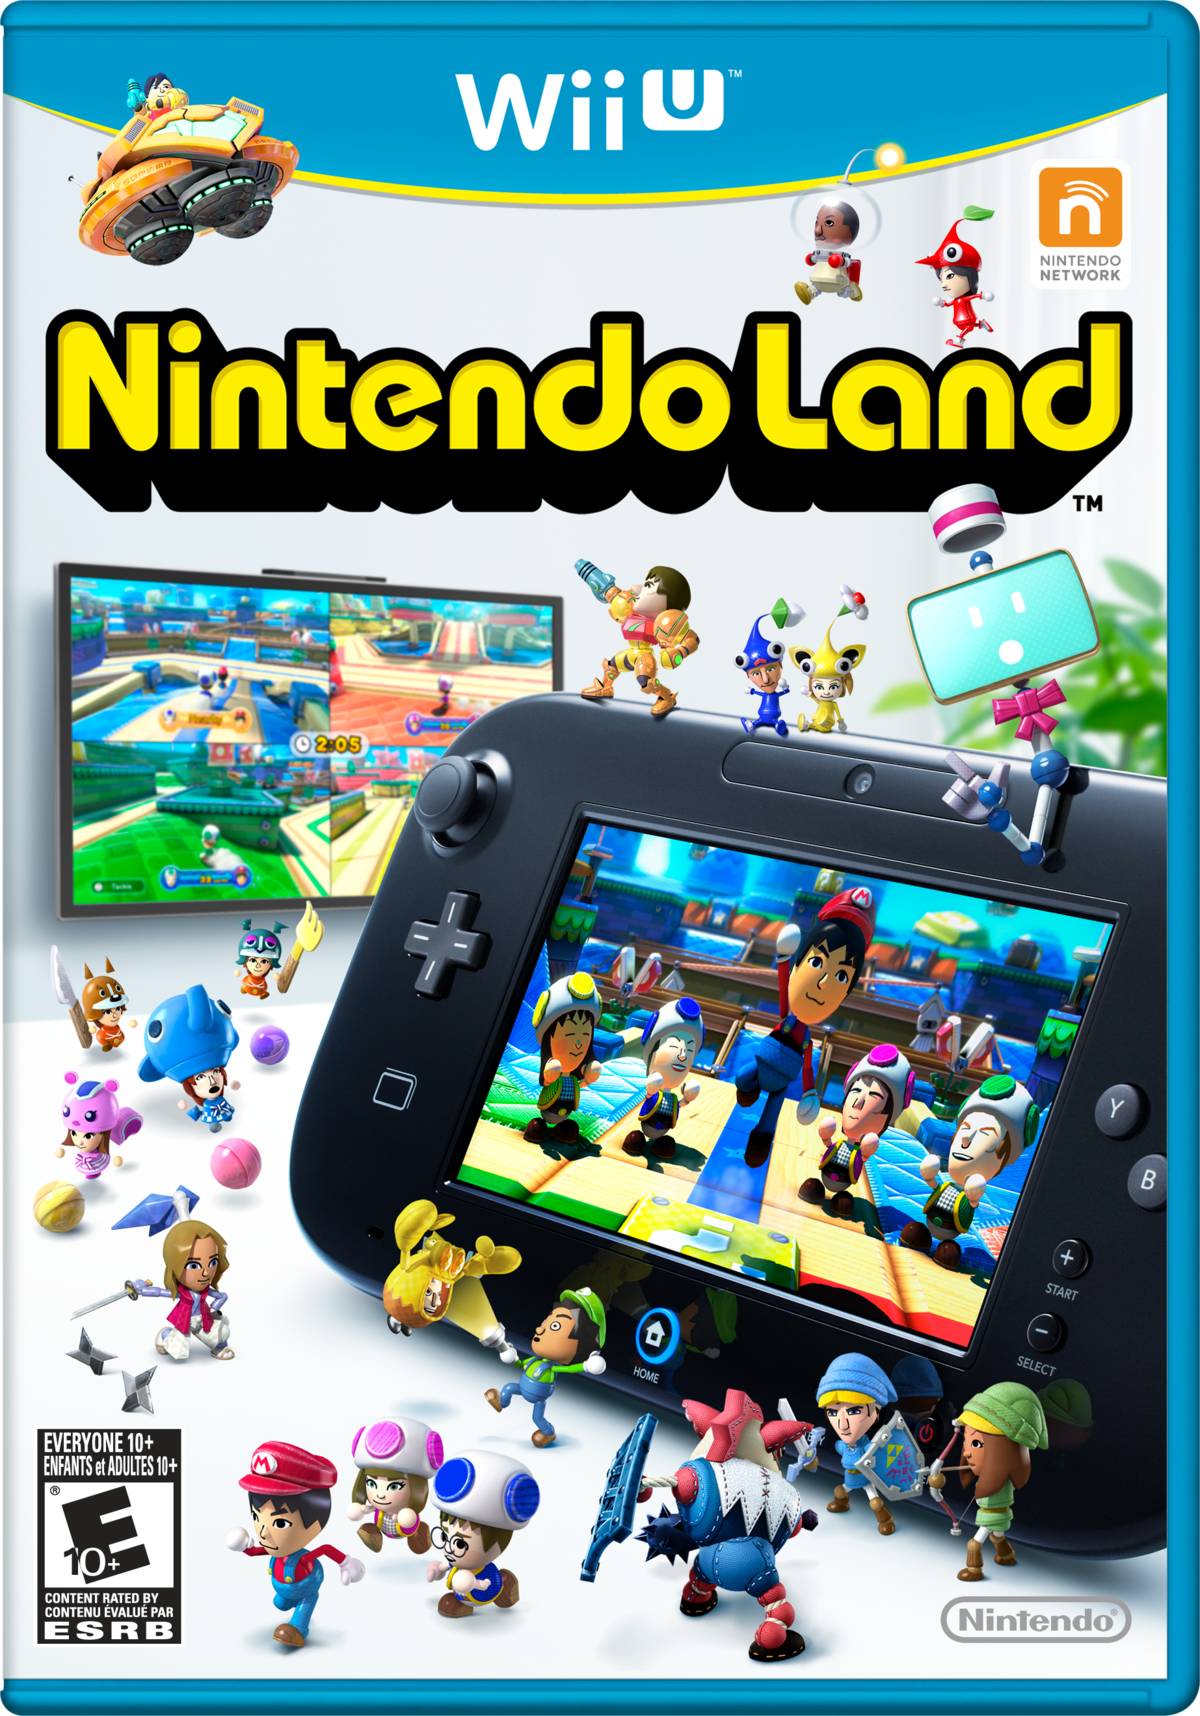 Игра nintendo на пк. Нинтендо Wii u. Nintendo Land (Nintendo Wii u). Нинтендо Wii игры. Картриджи на Нинтендо Wii u.